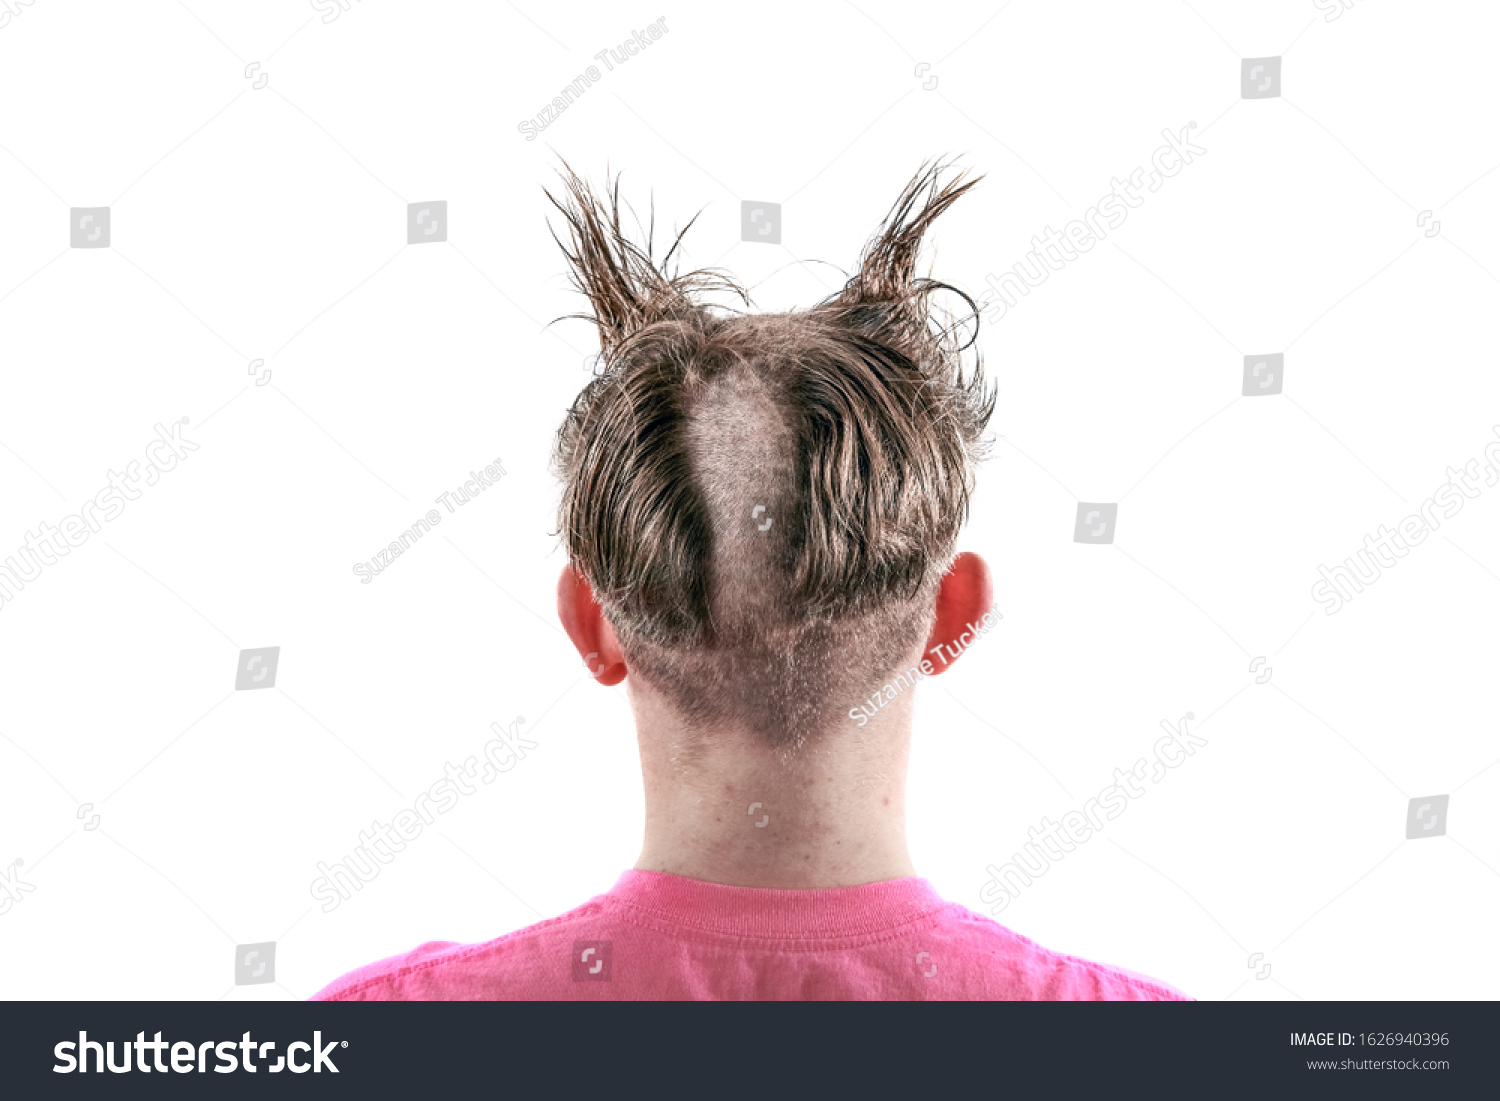 Teen with an odd bad haircut #1626940396